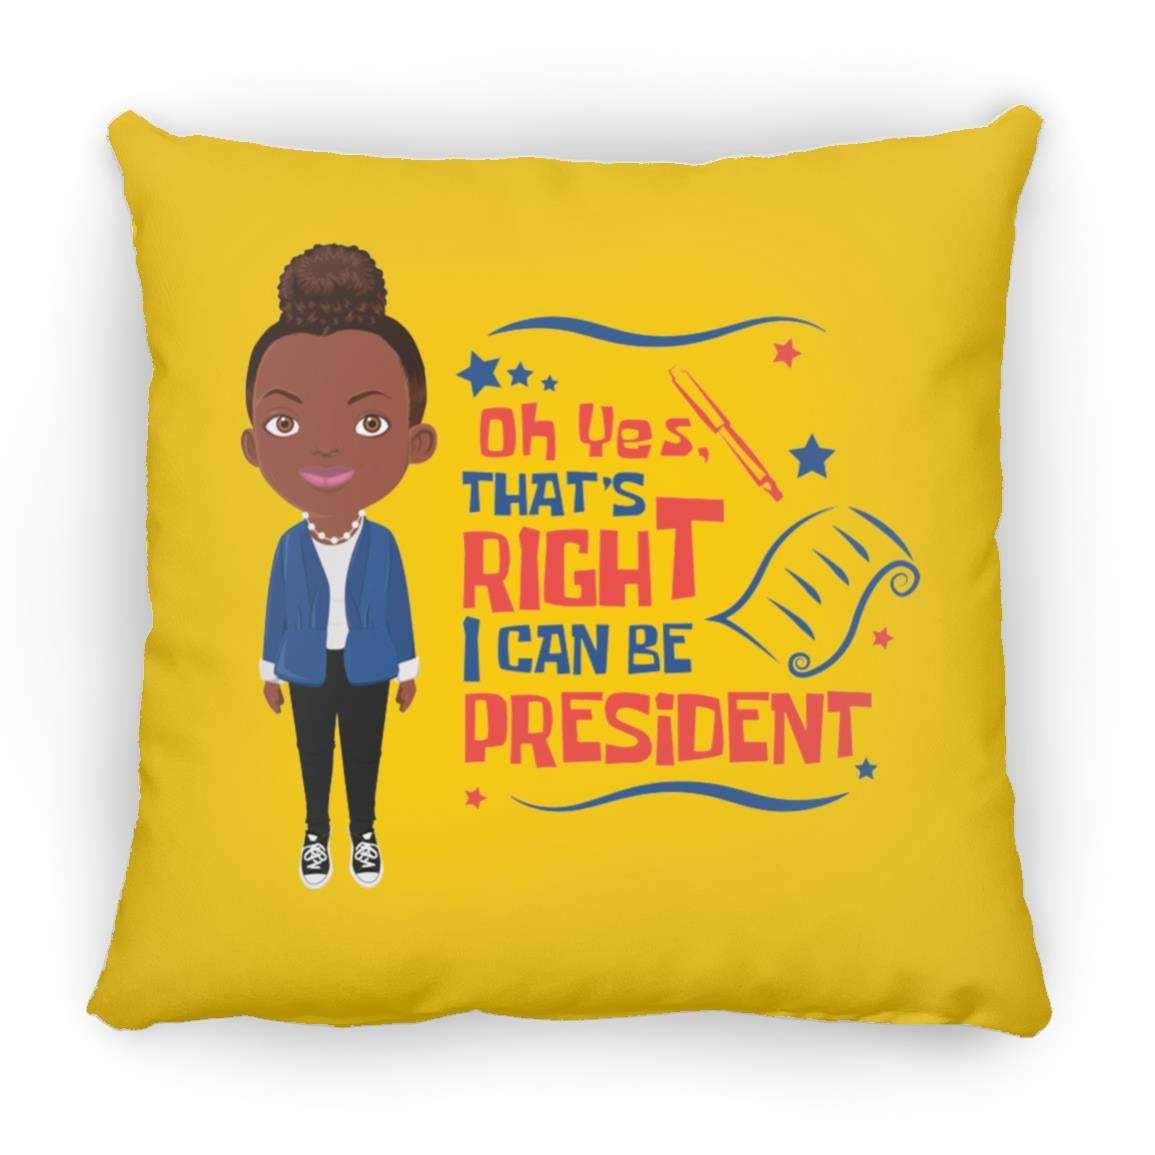 President Square Pillow 16x16-CustomCat-Accessories,Next President,Pillows